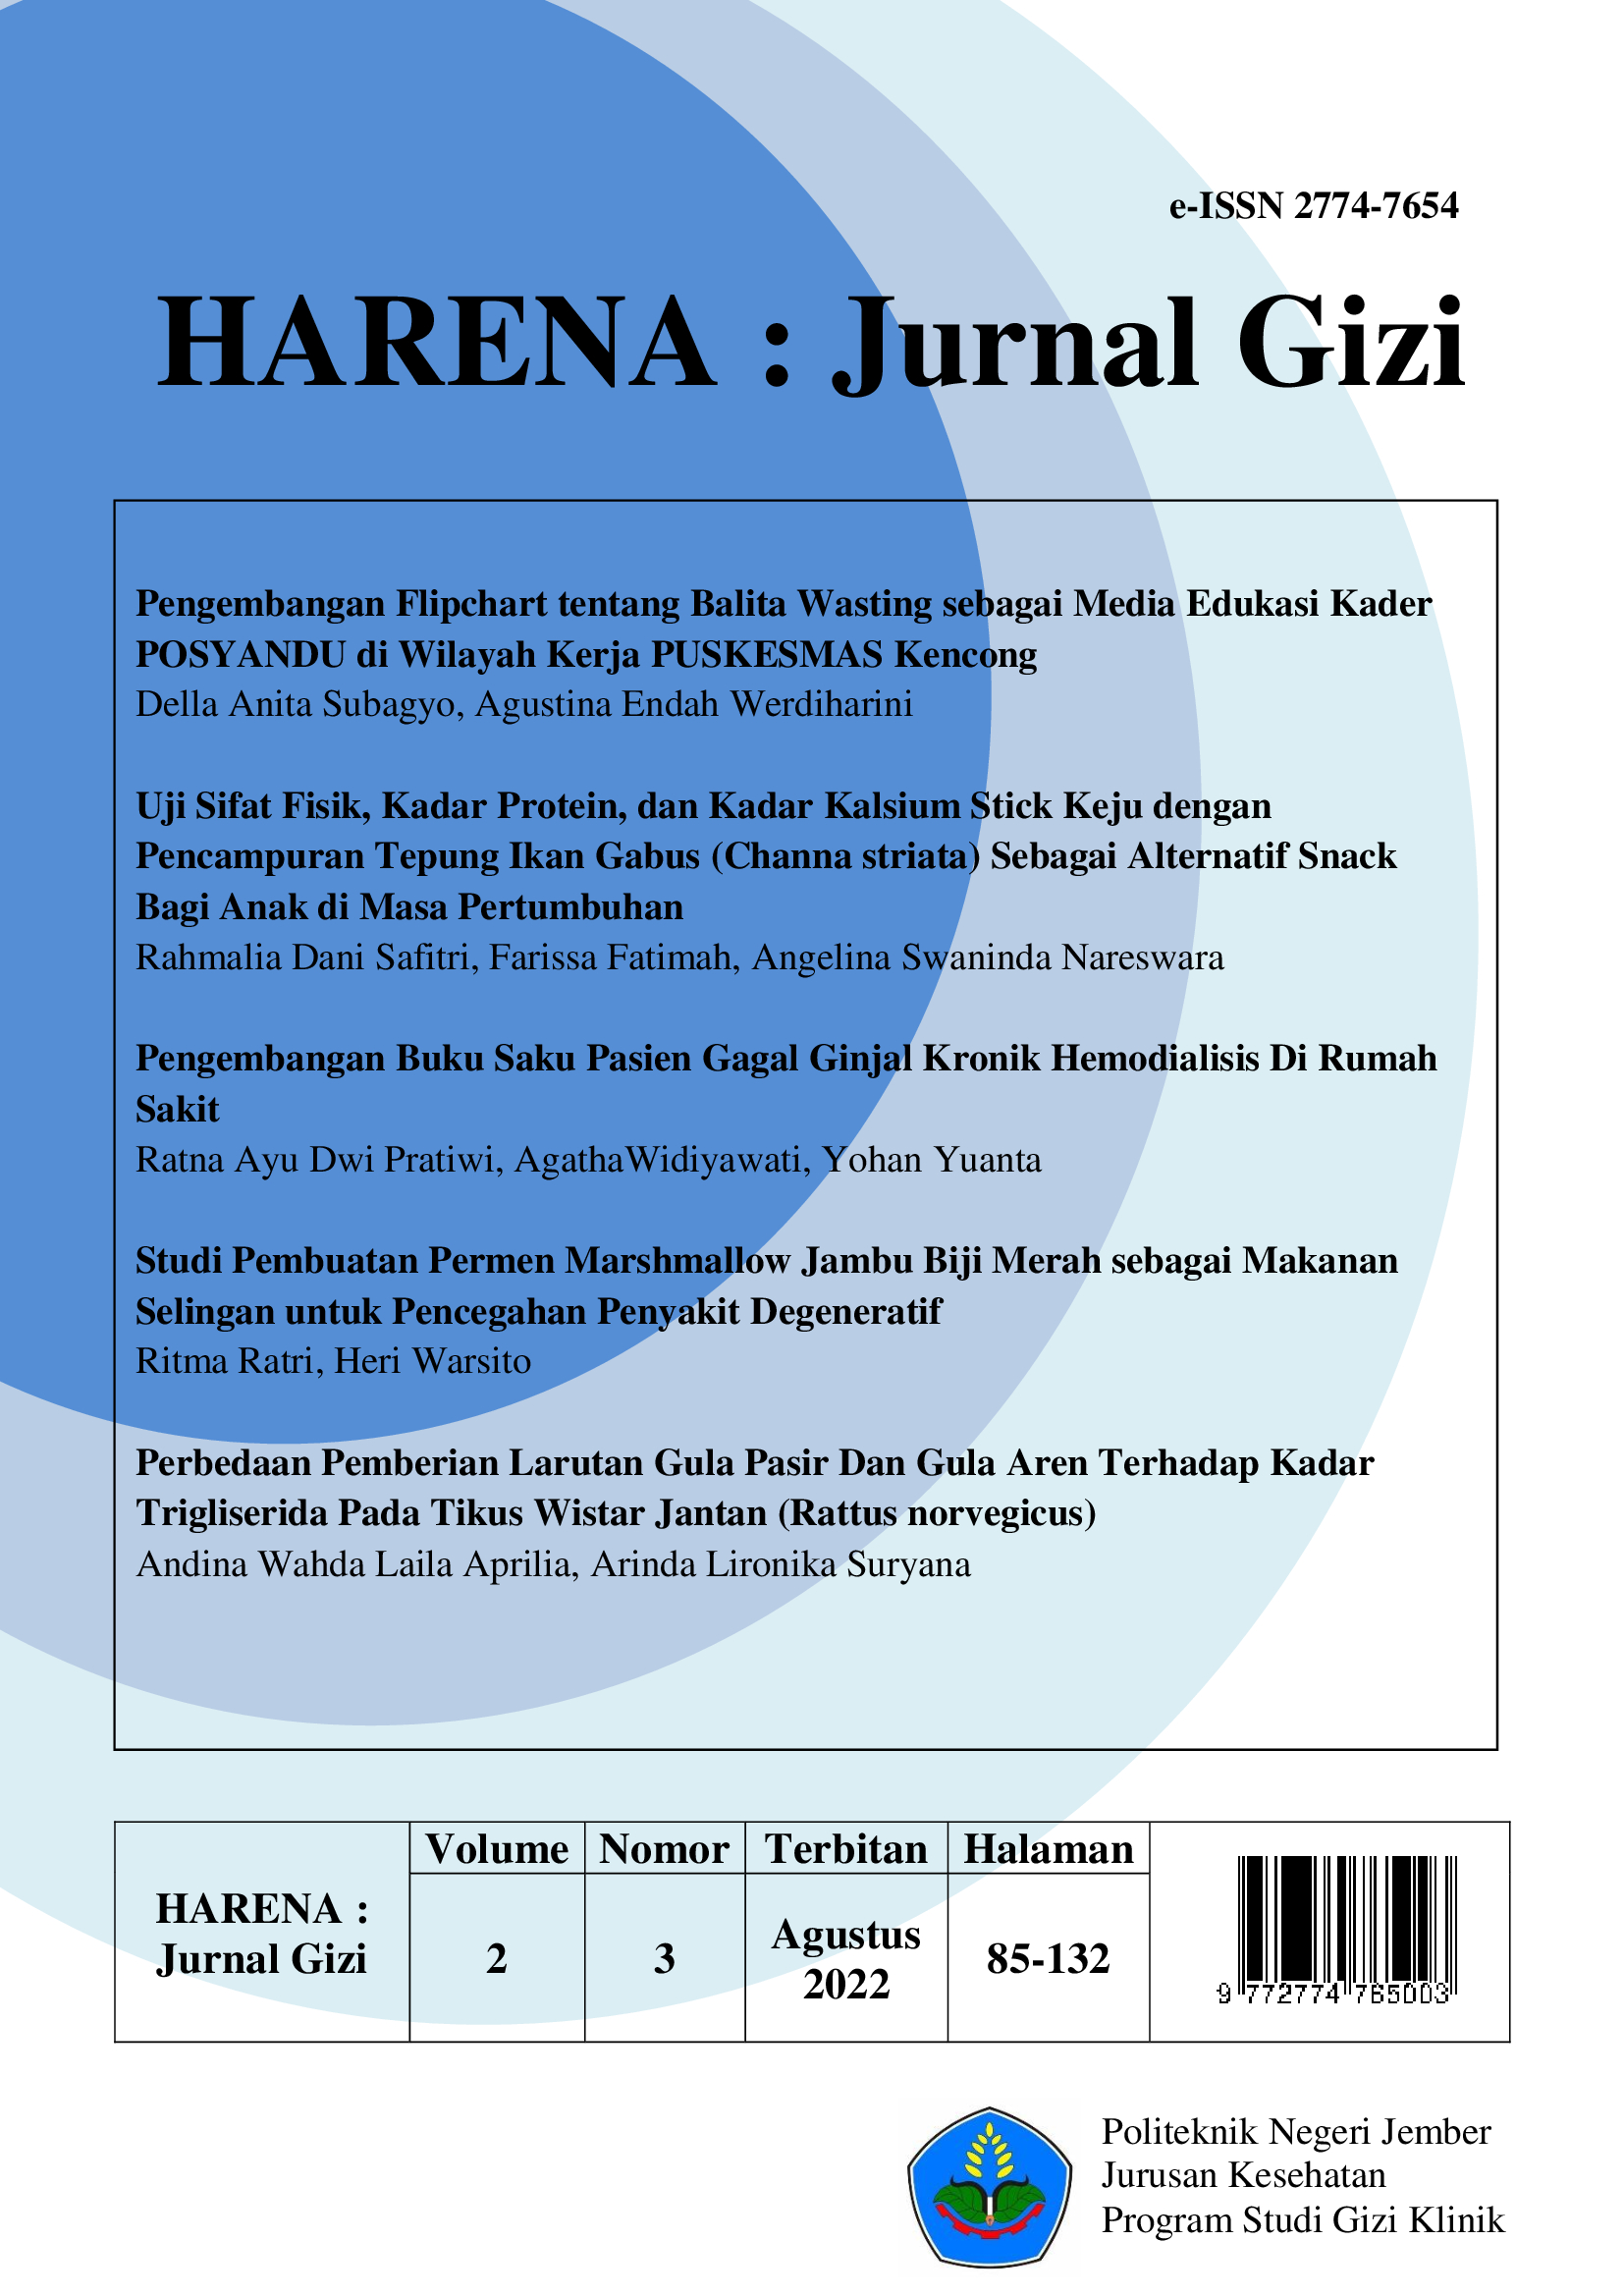 					Lihat Vol 2 No 3 (2022): HARENA: Jurnal Gizi (Agustus 2022)
				